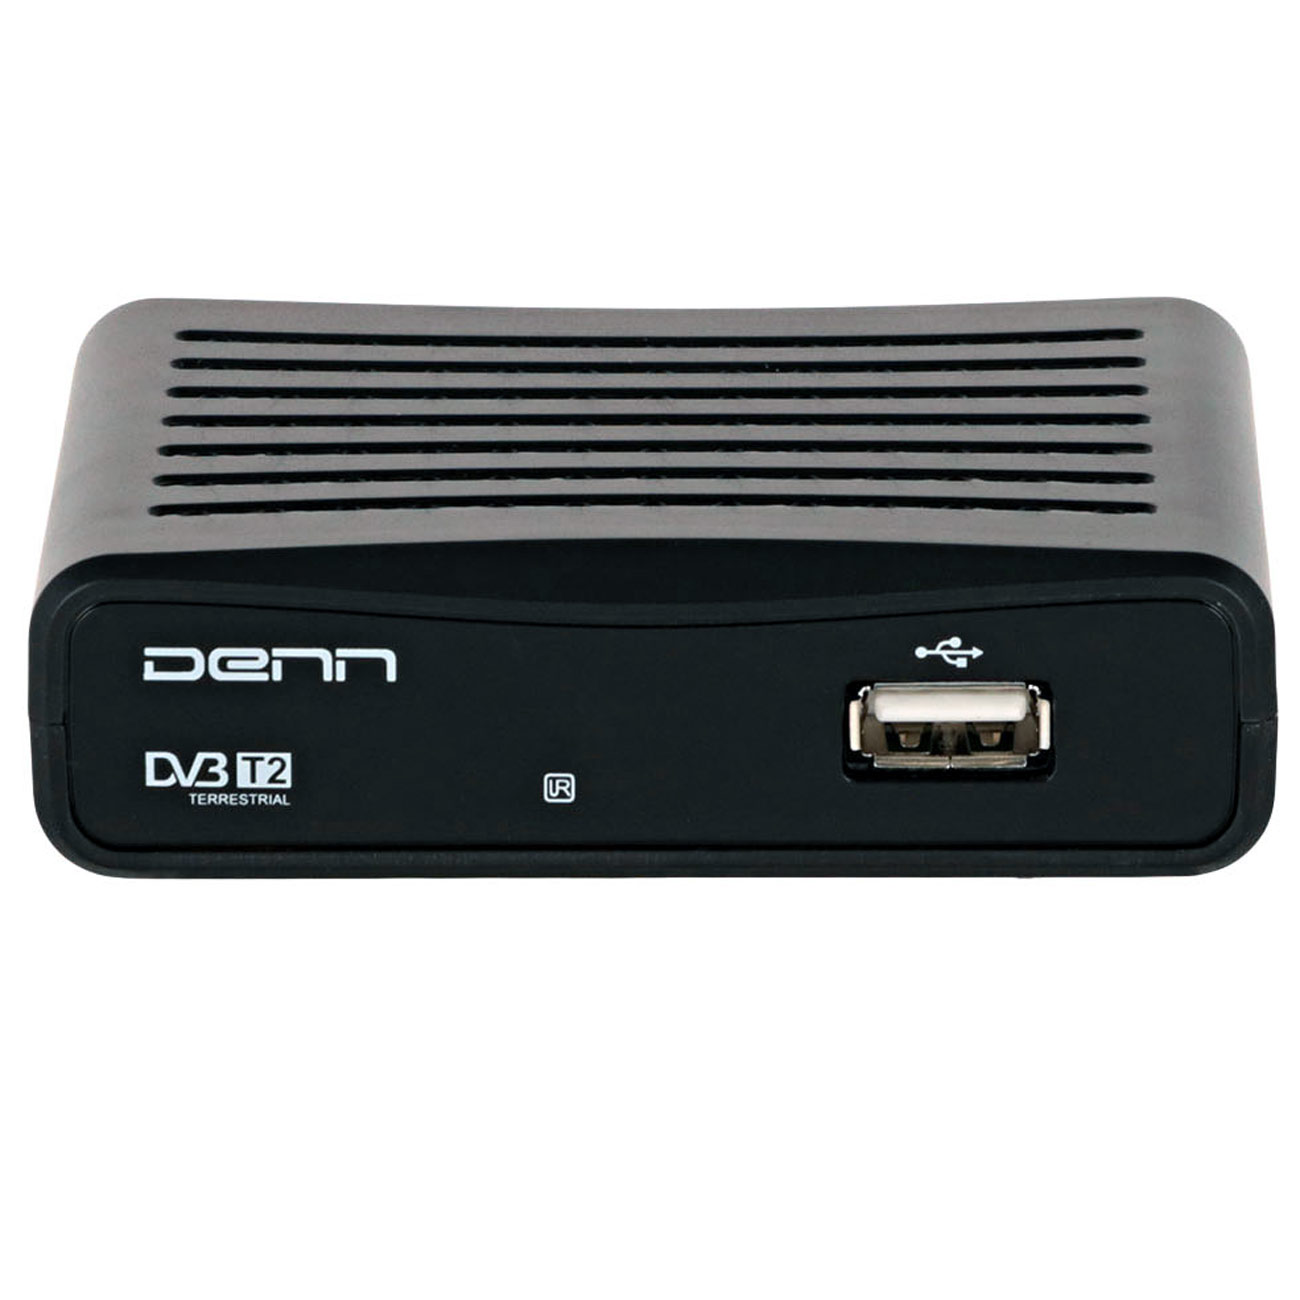 DVB-T2 ресивер Denn Ddt 121, цвет черный